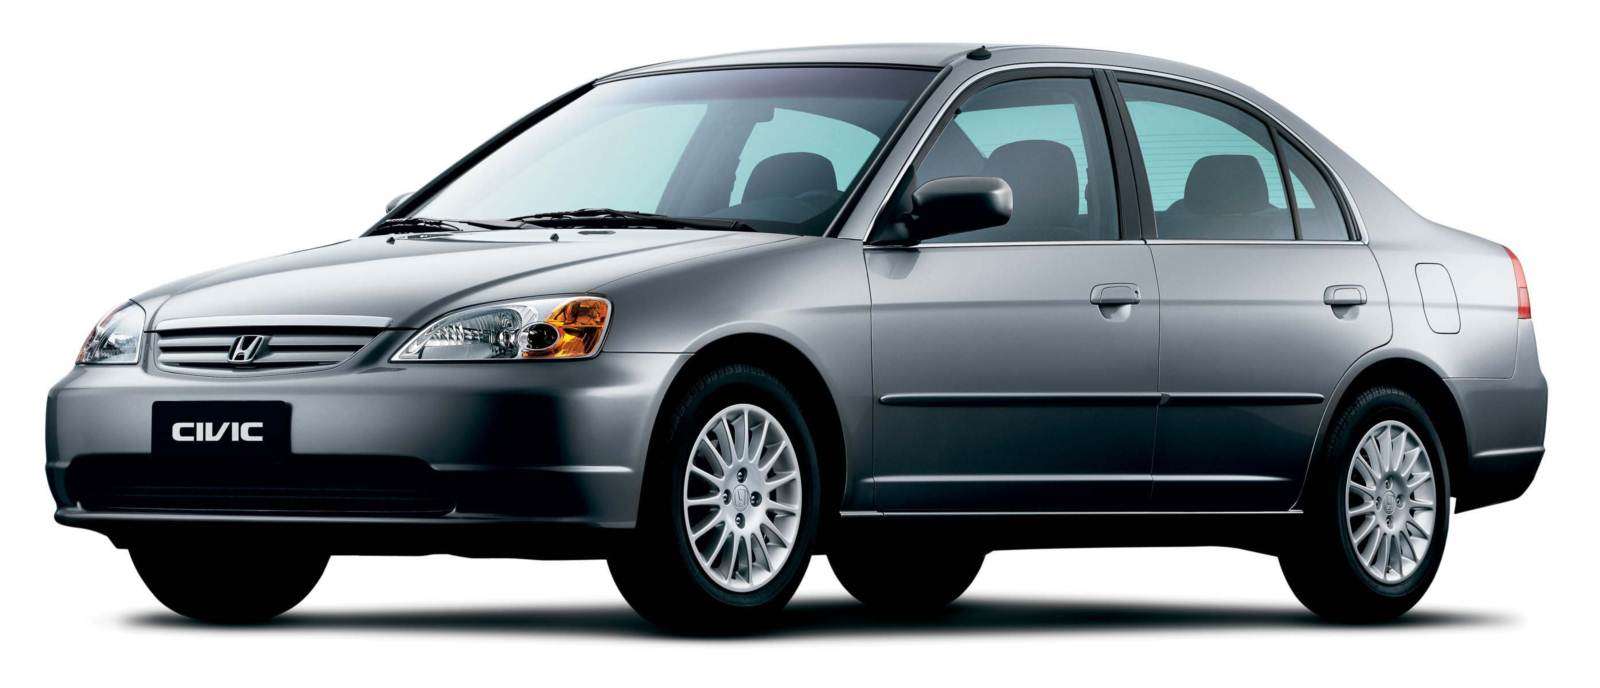 2002 Honda civic recalls airbag #5